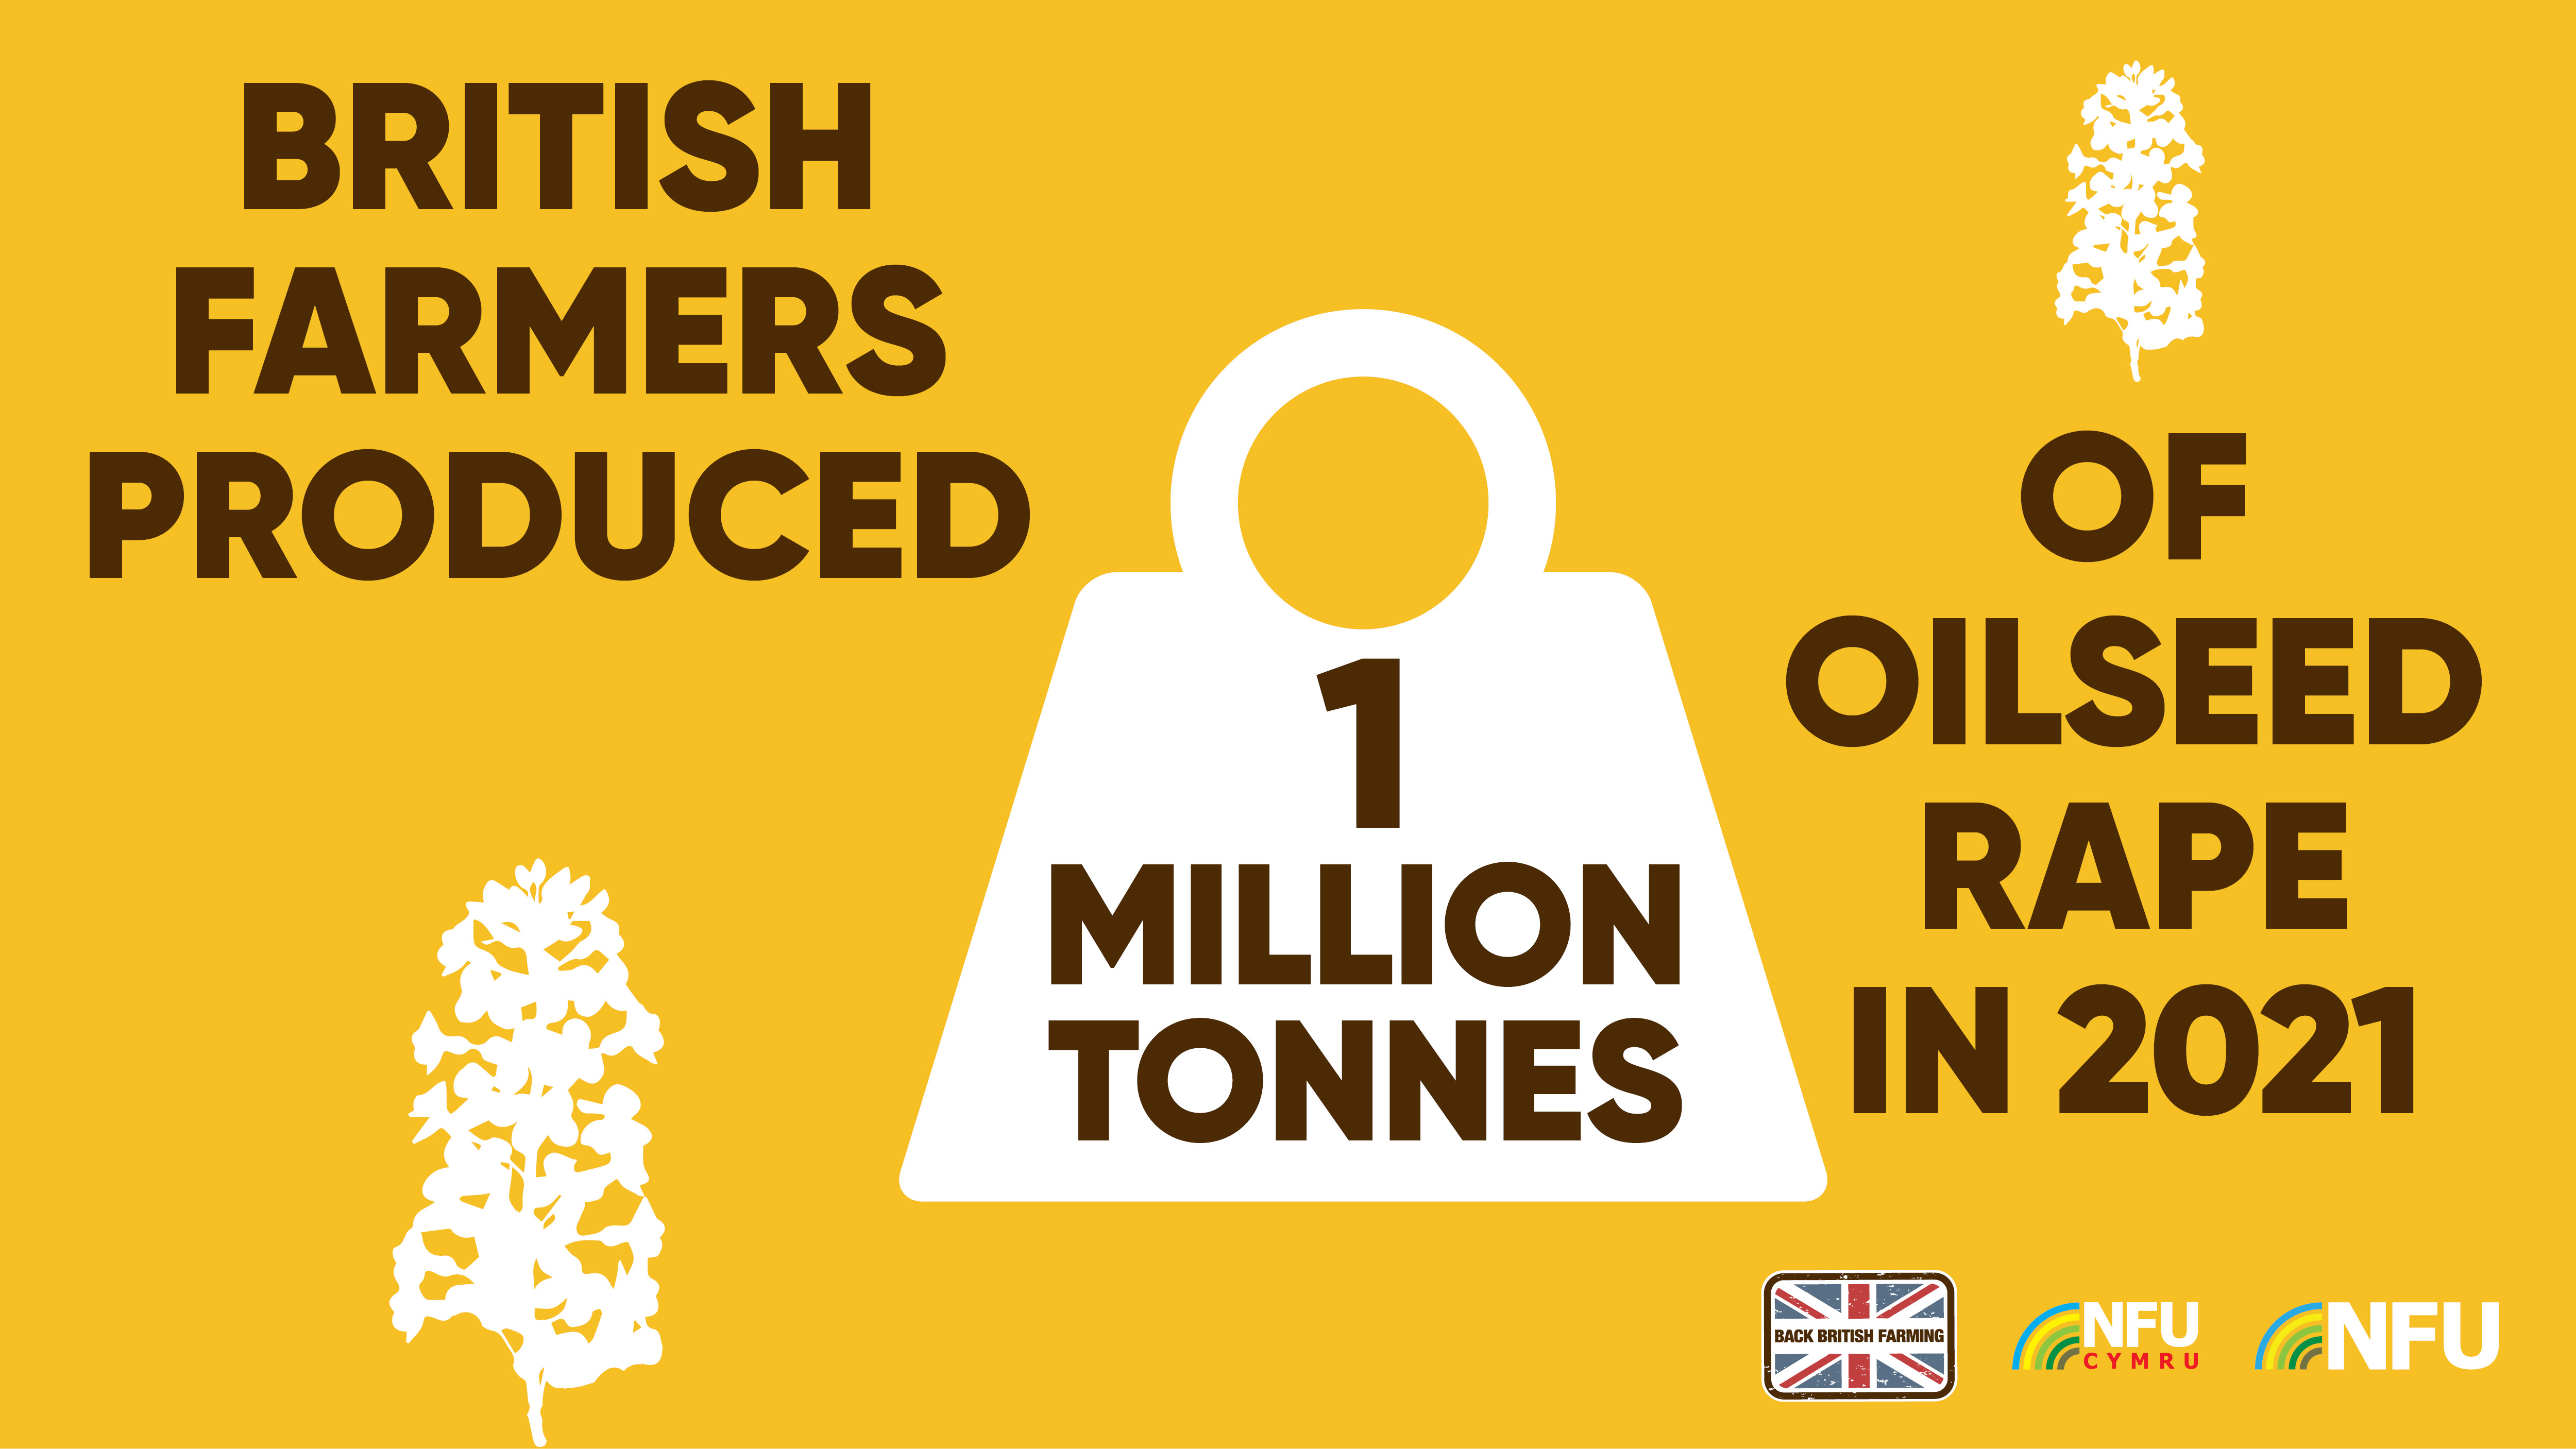 British farmers produced 1 million tonnes of oilseed rape in 2021